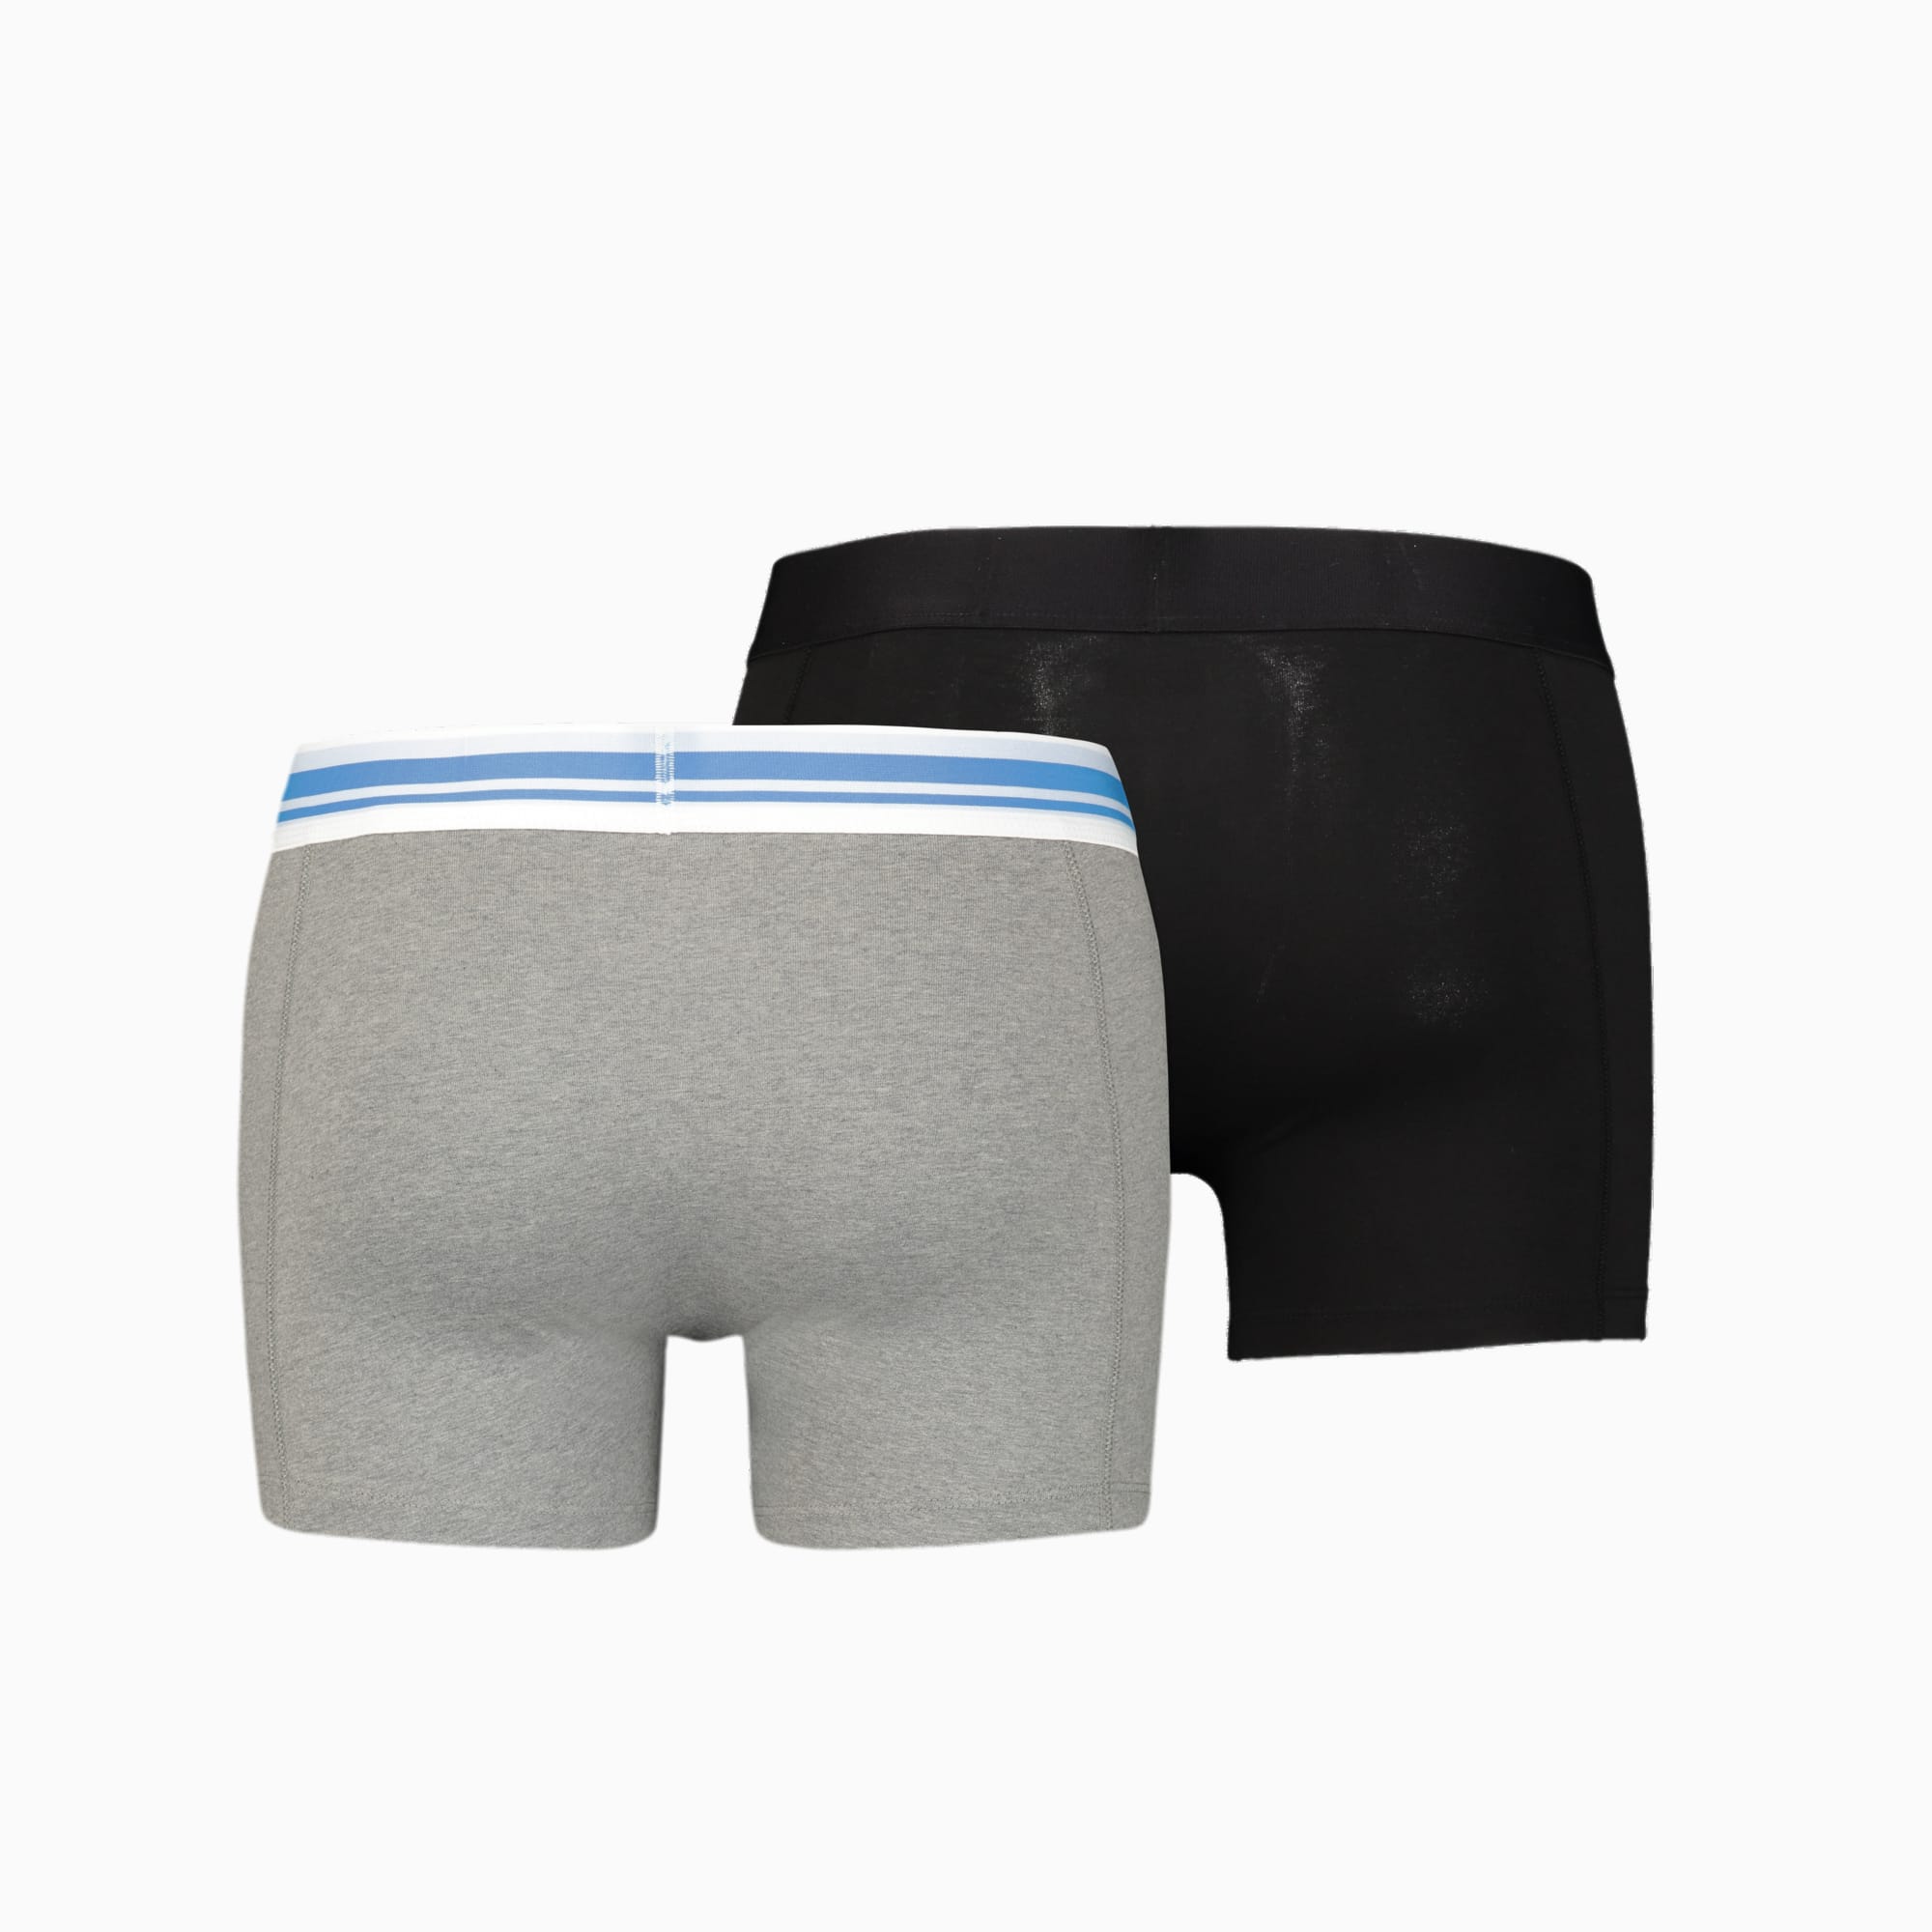 PUMA Placed Logo Herren-Boxershorts 2er-Pack, Grau/Blau, Größe: L, Kleidung